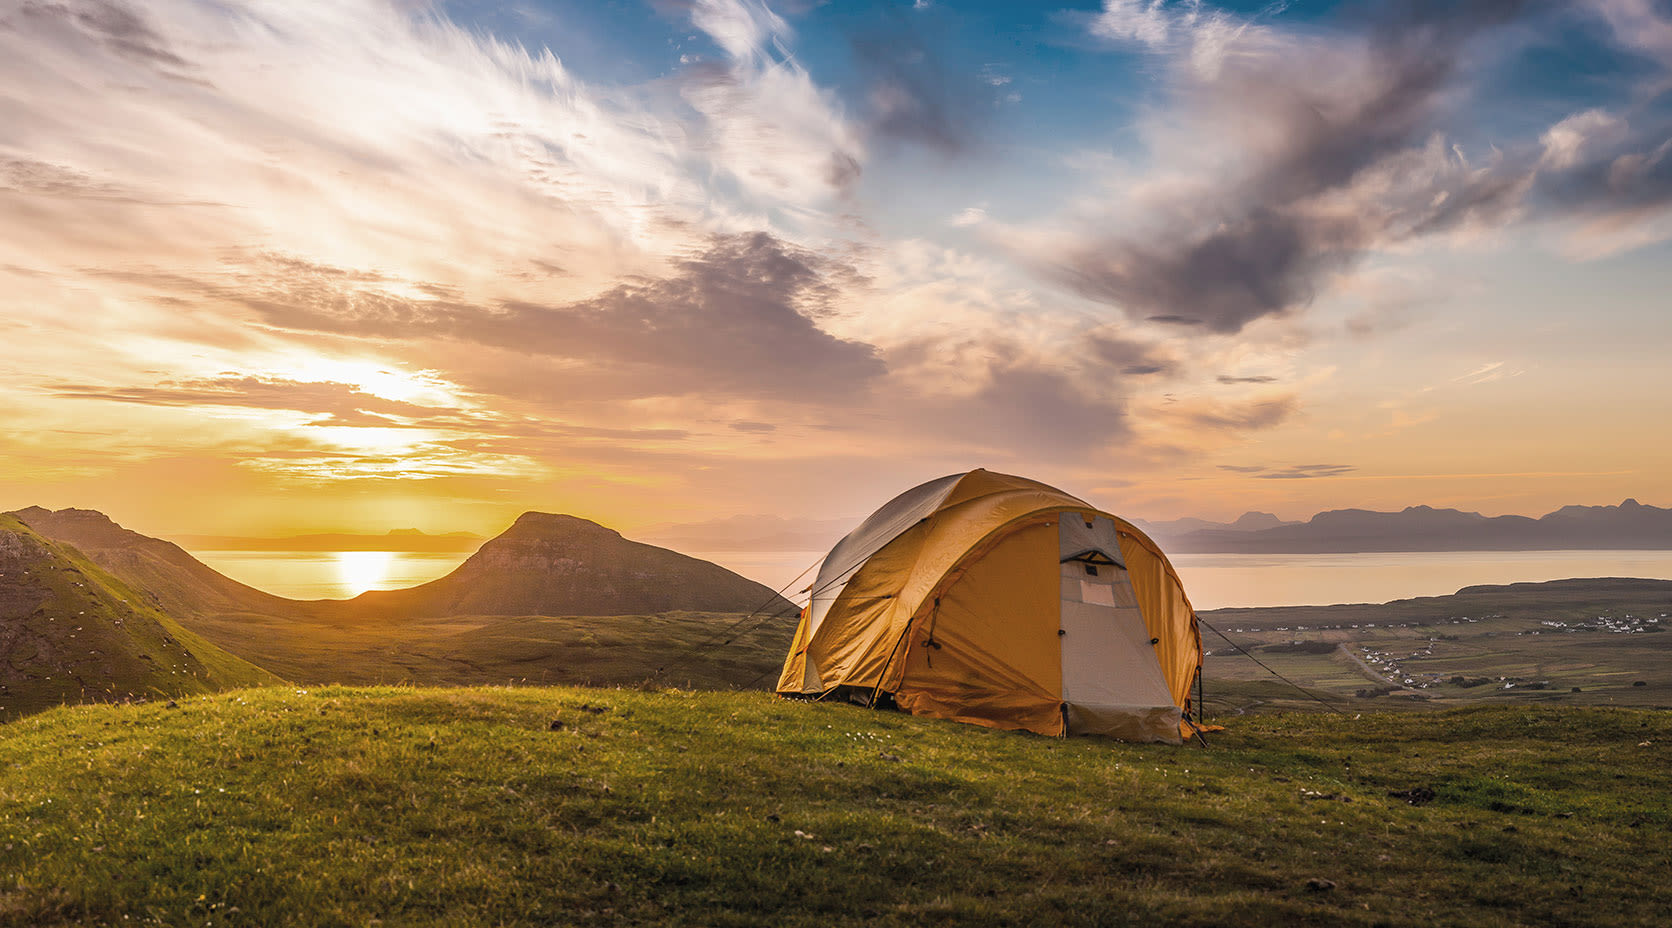 Trekking-Zelt bei Sonnenuntergang vor Berglandschaft